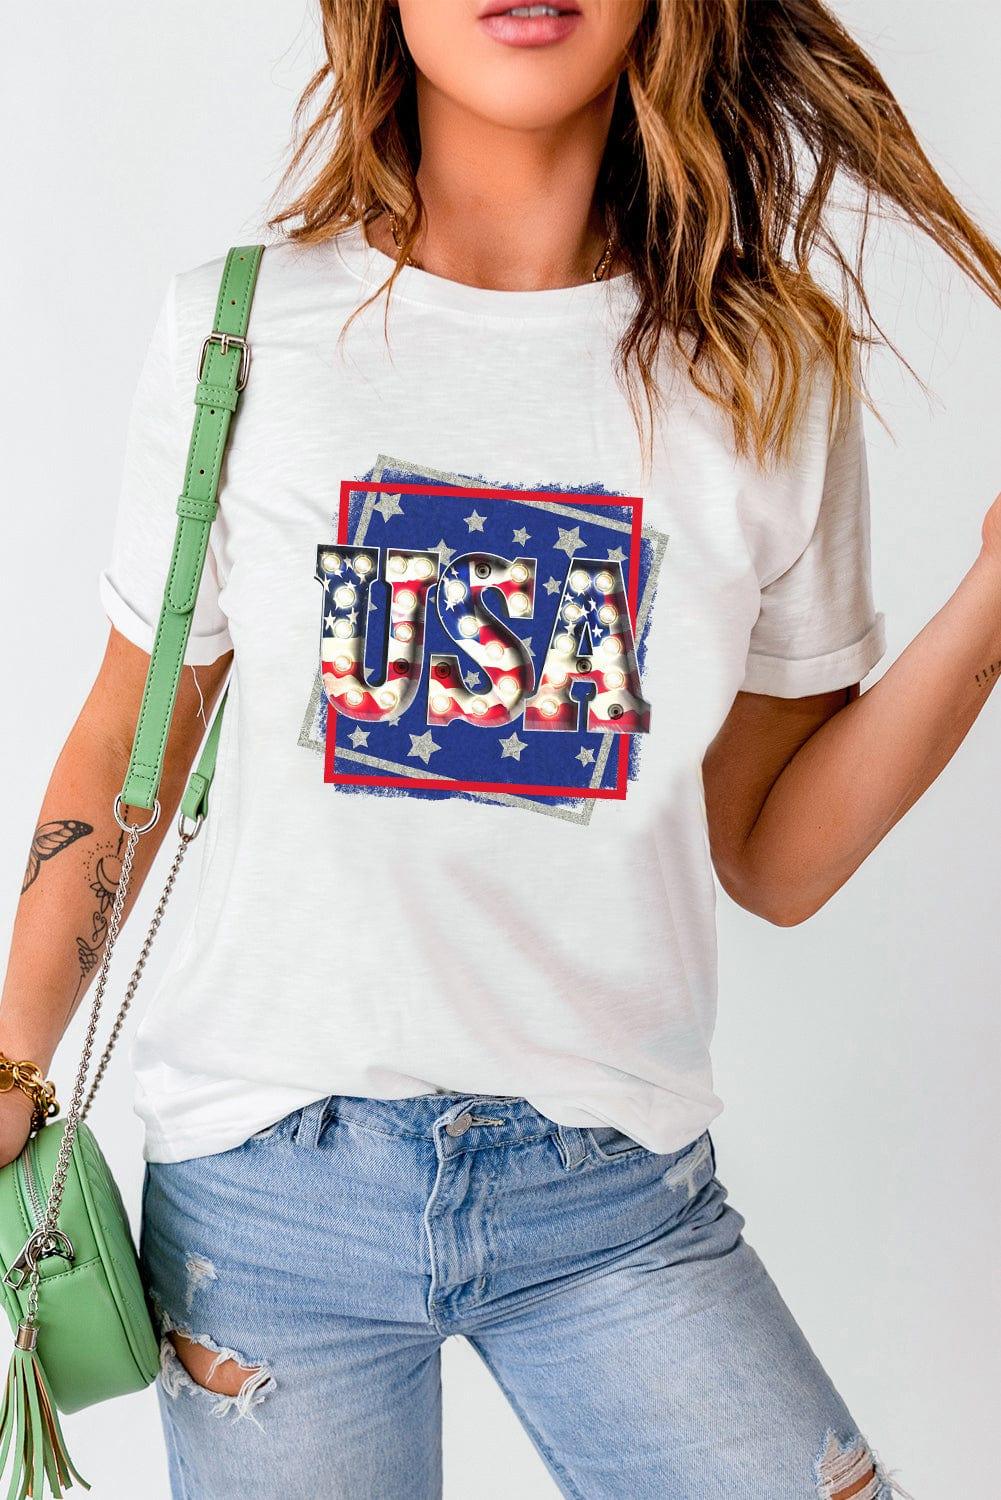 Trendsi Trendsi USA Graphic Round Neck Tee Shirt